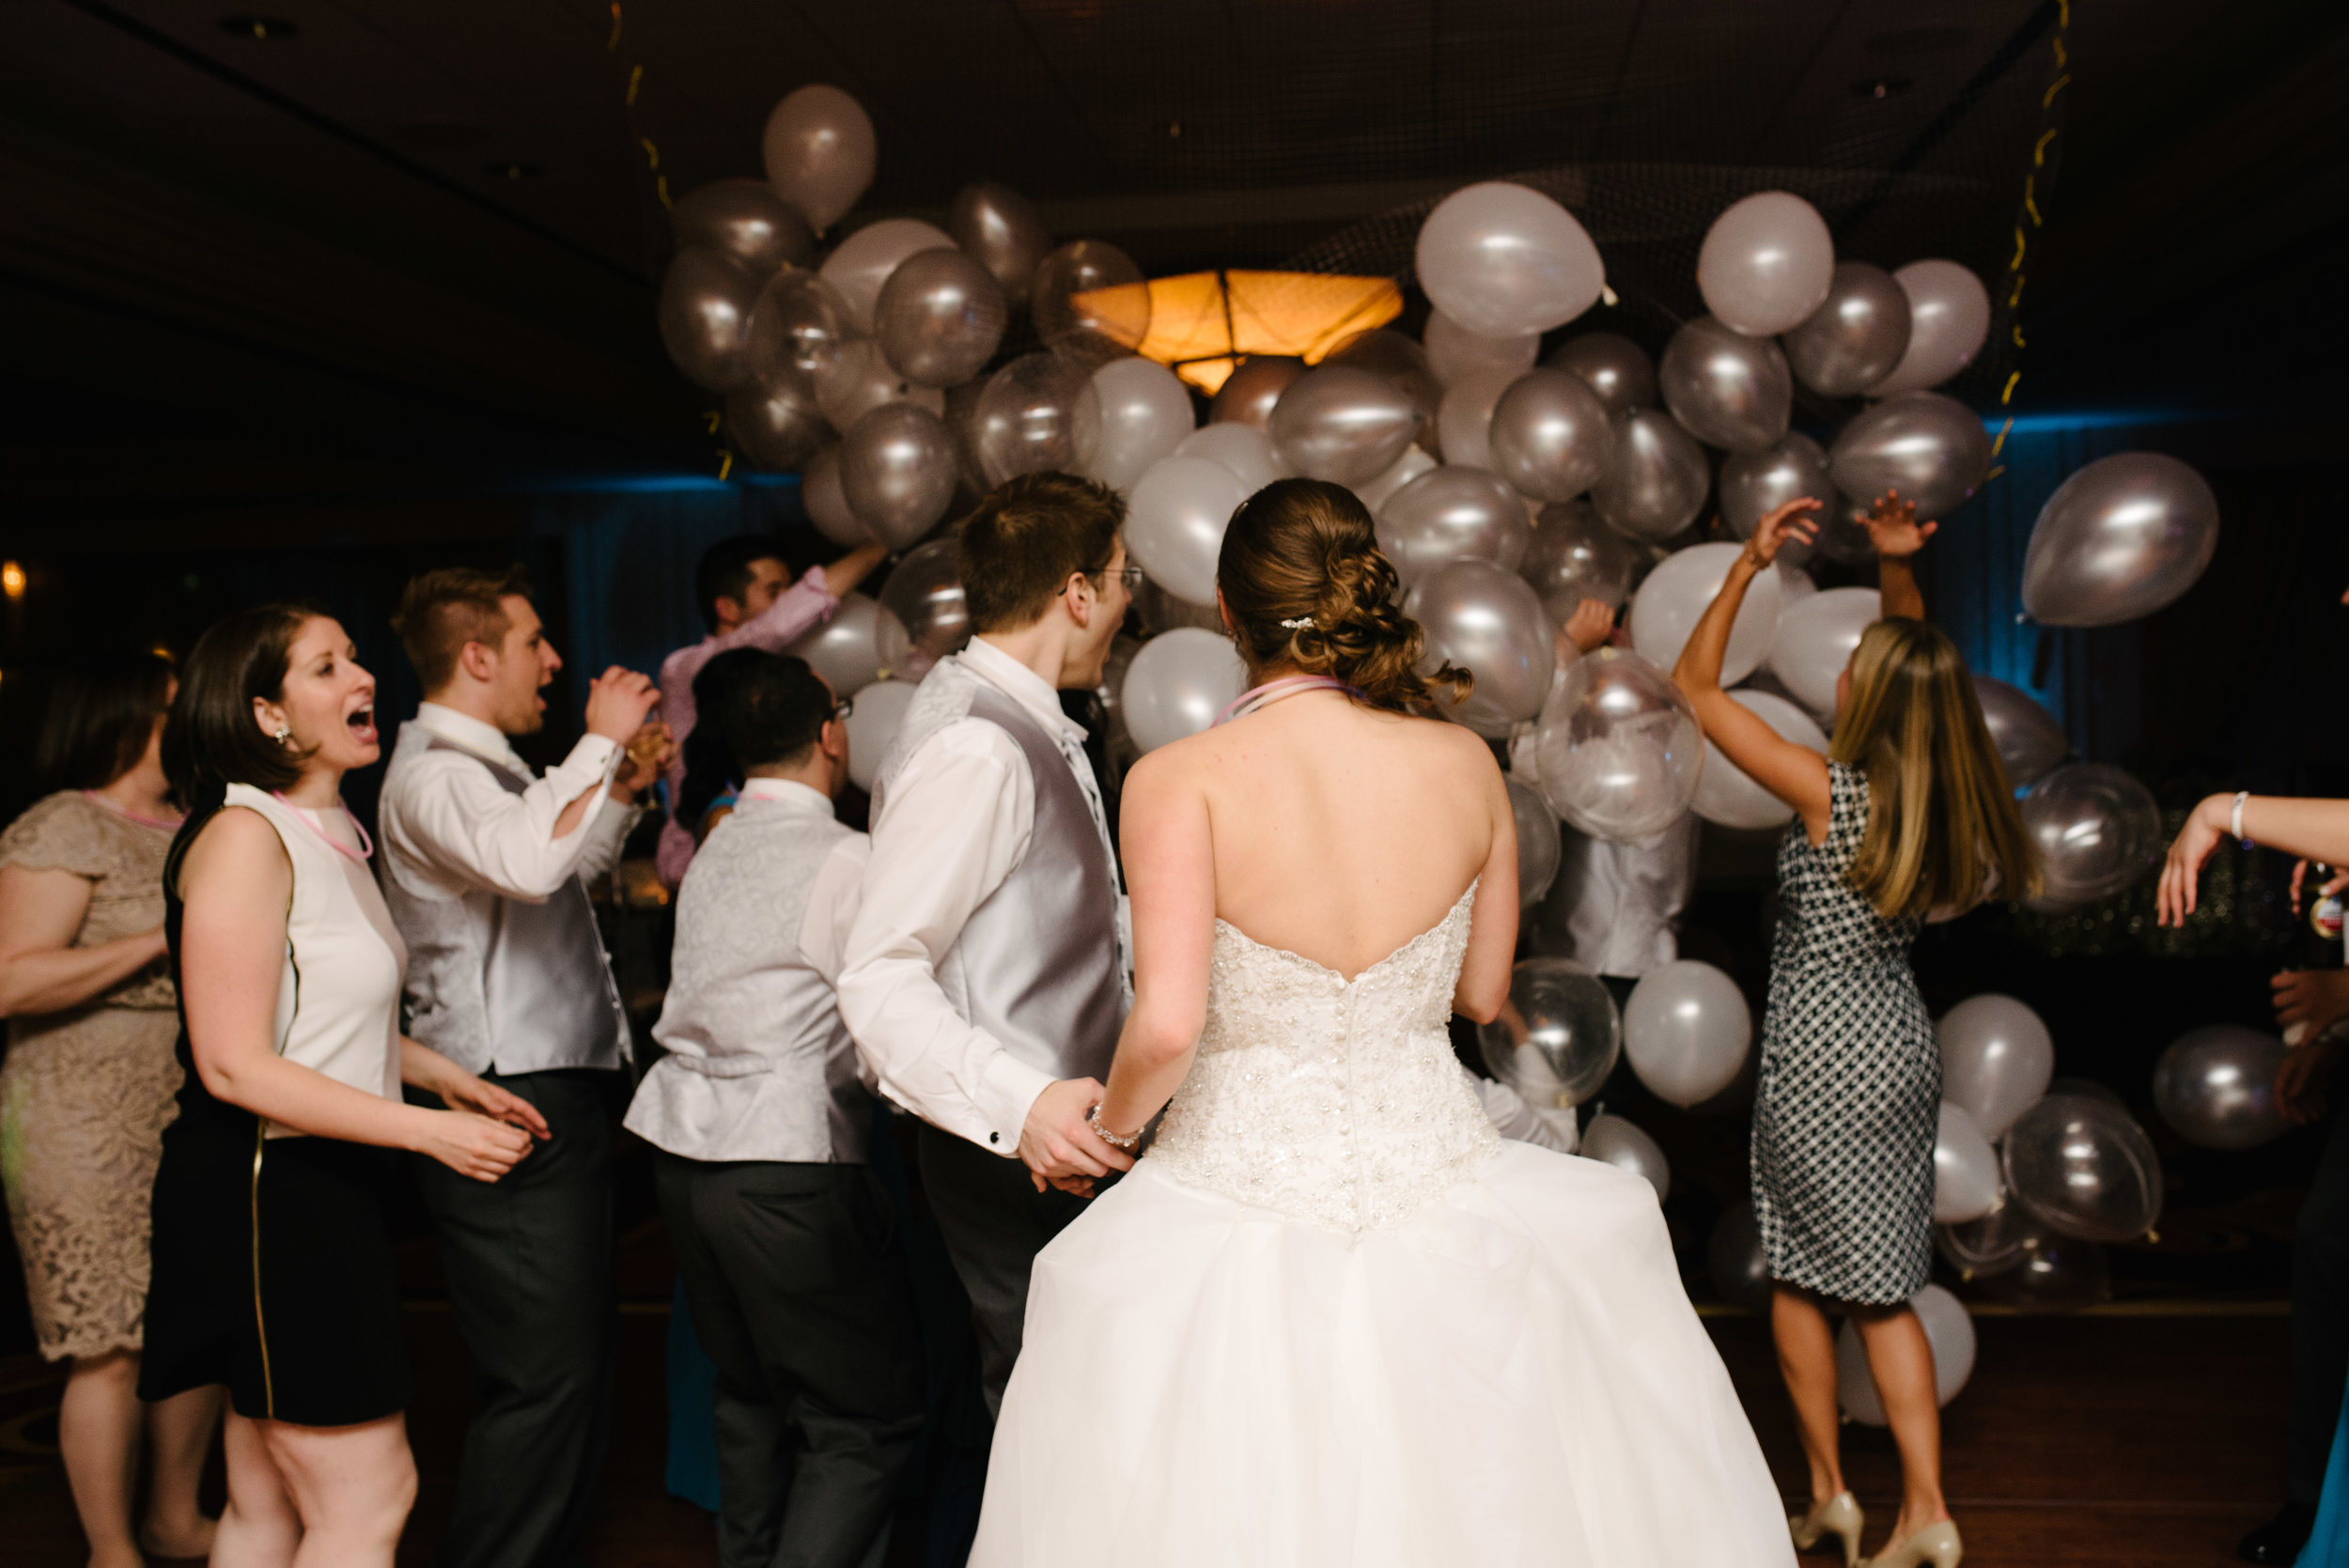 Balloon drop ballroom wedding reception // The Miner Details weddings